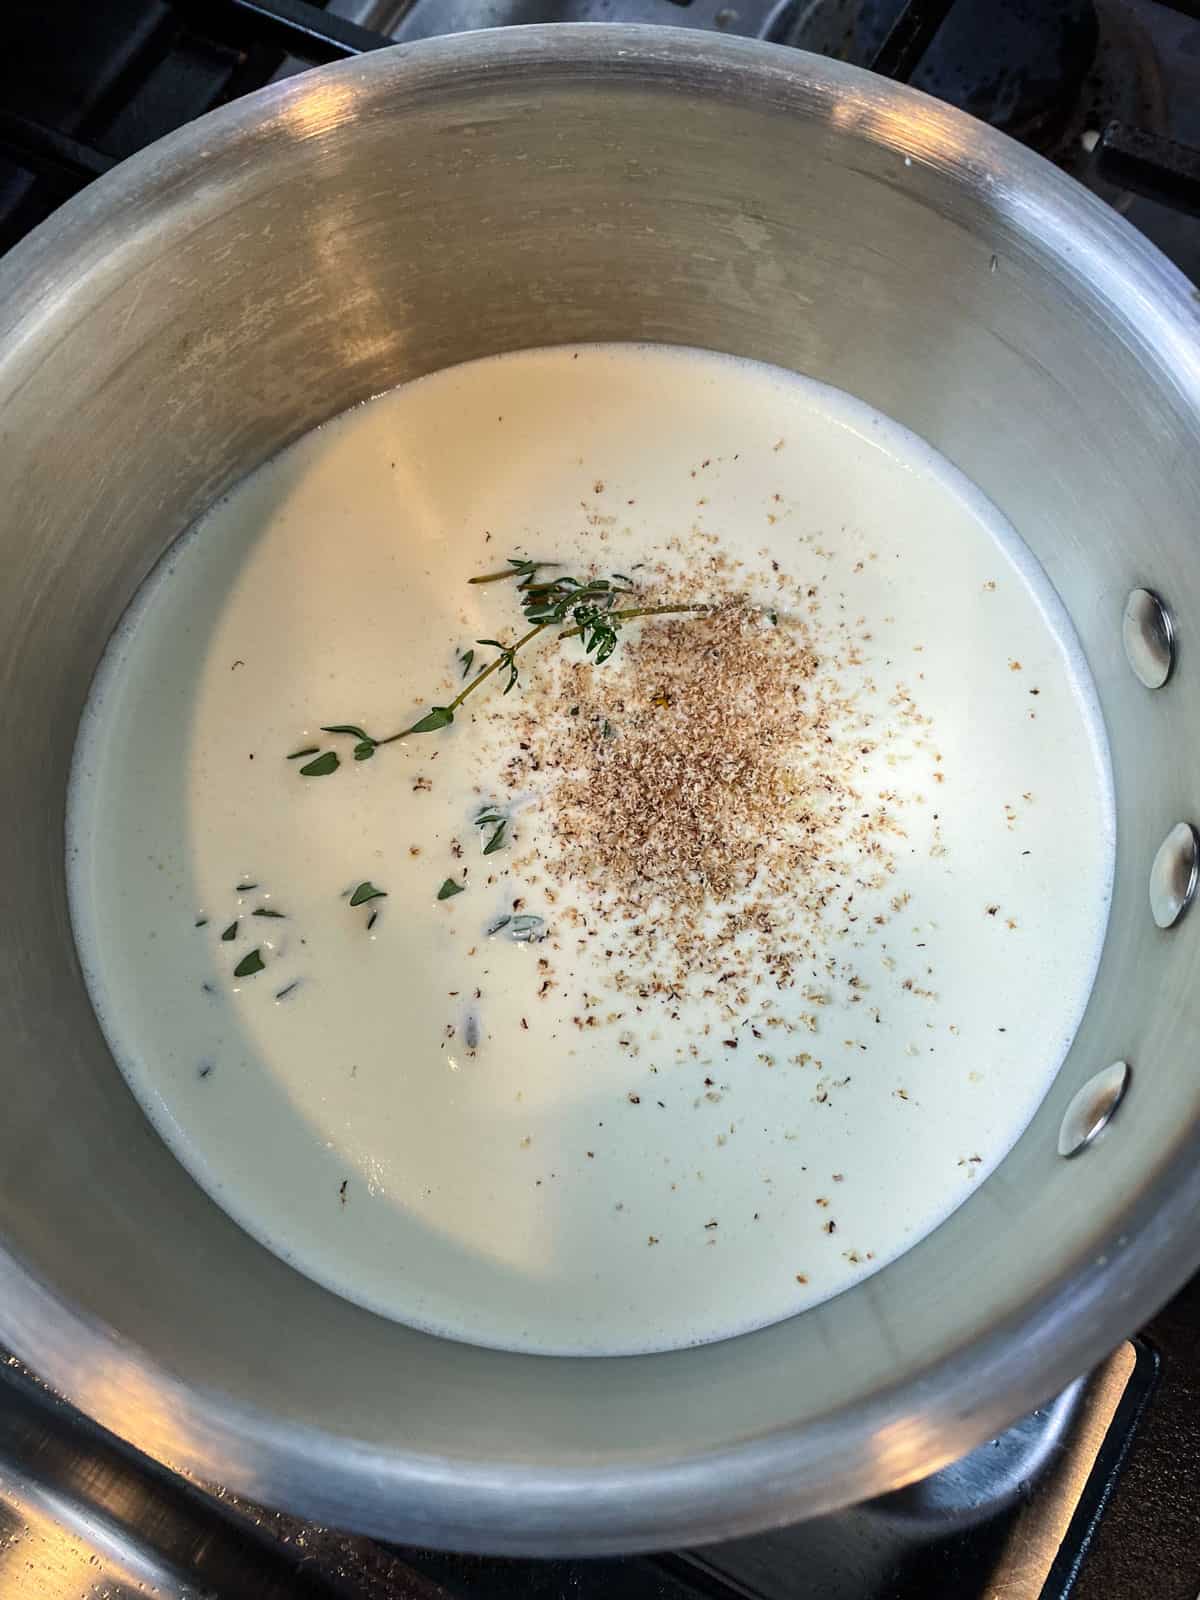 Steep fresh thyme, nutmeg and garlic in heavy cream and heat to warm through.